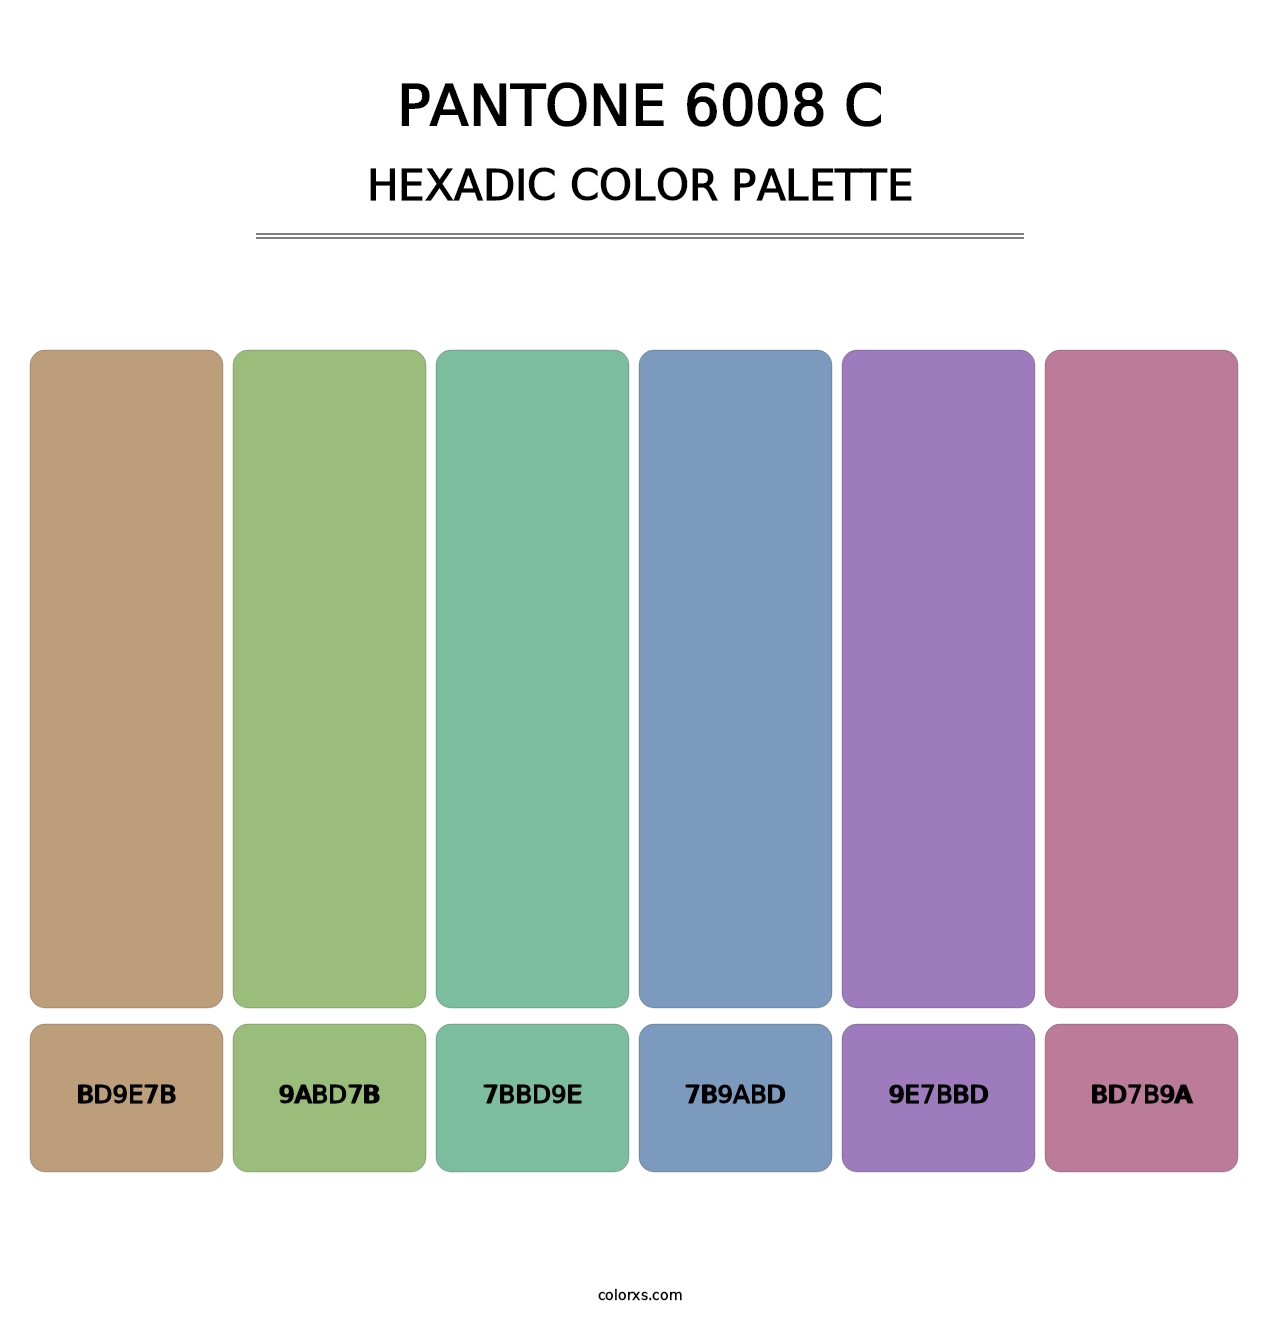 PANTONE 6008 C - Hexadic Color Palette